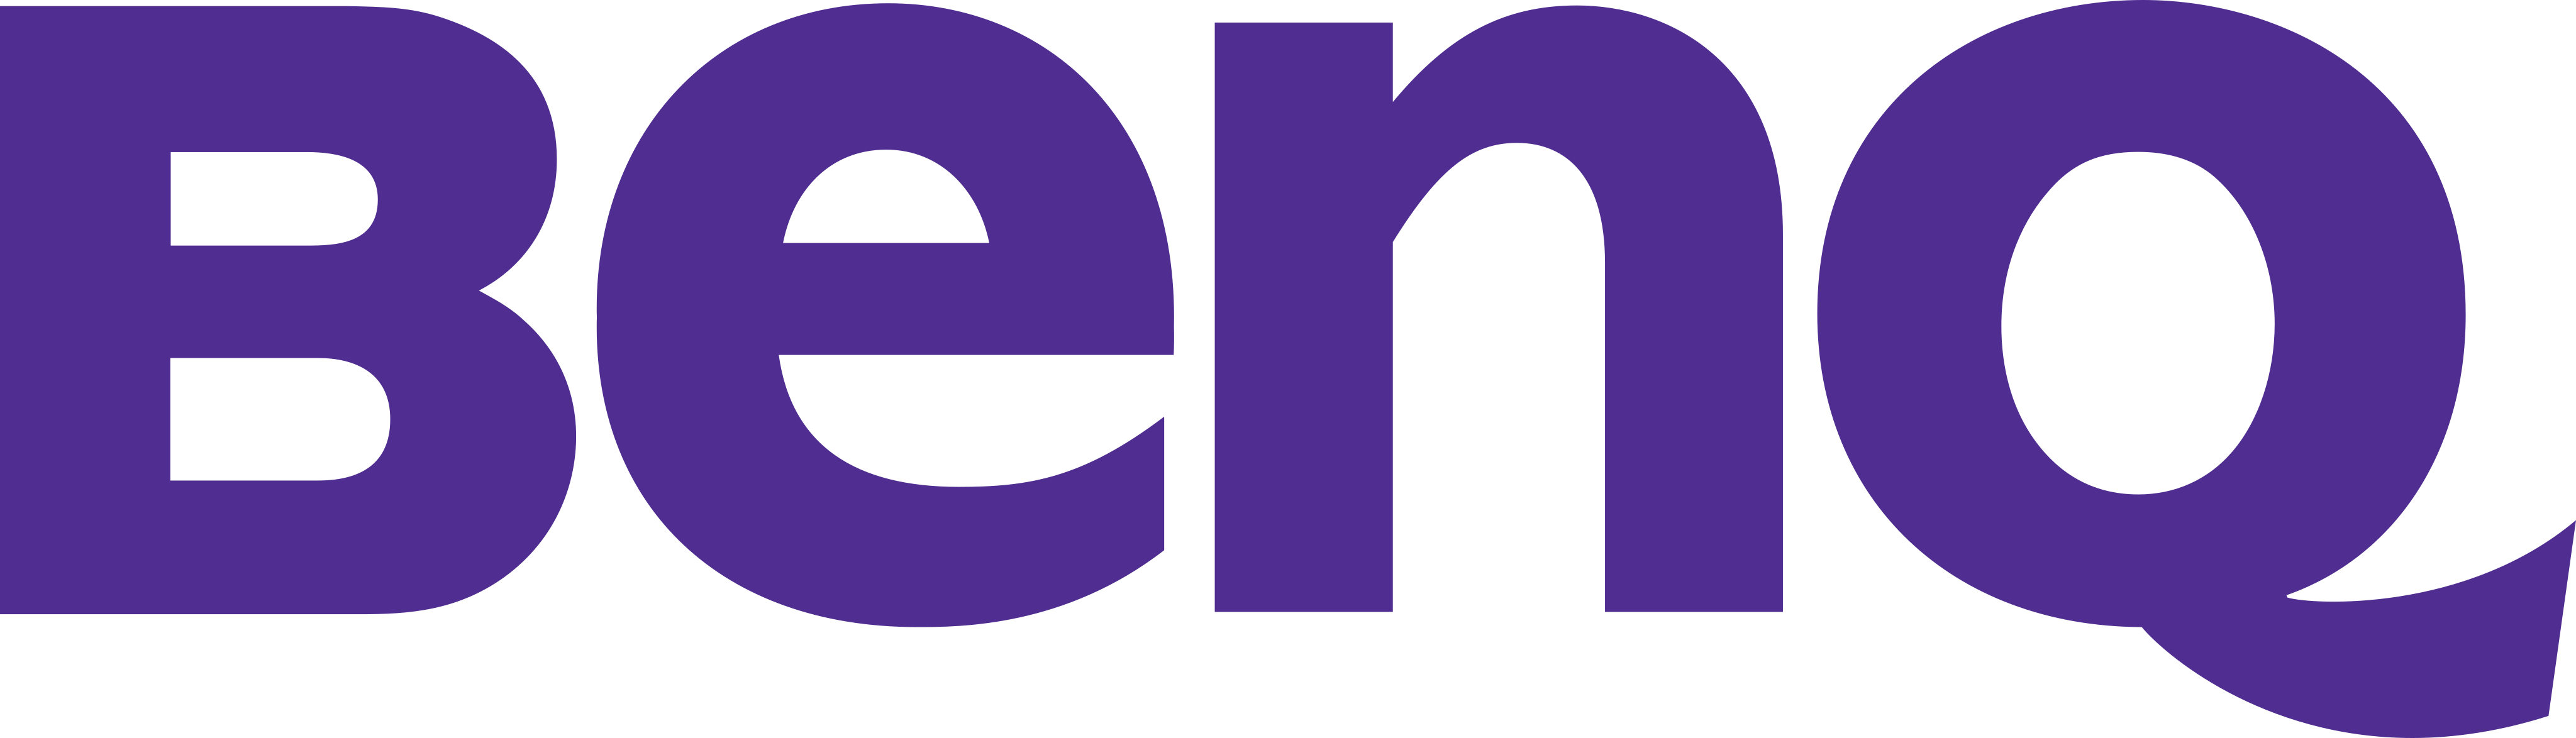 benq-logo-1